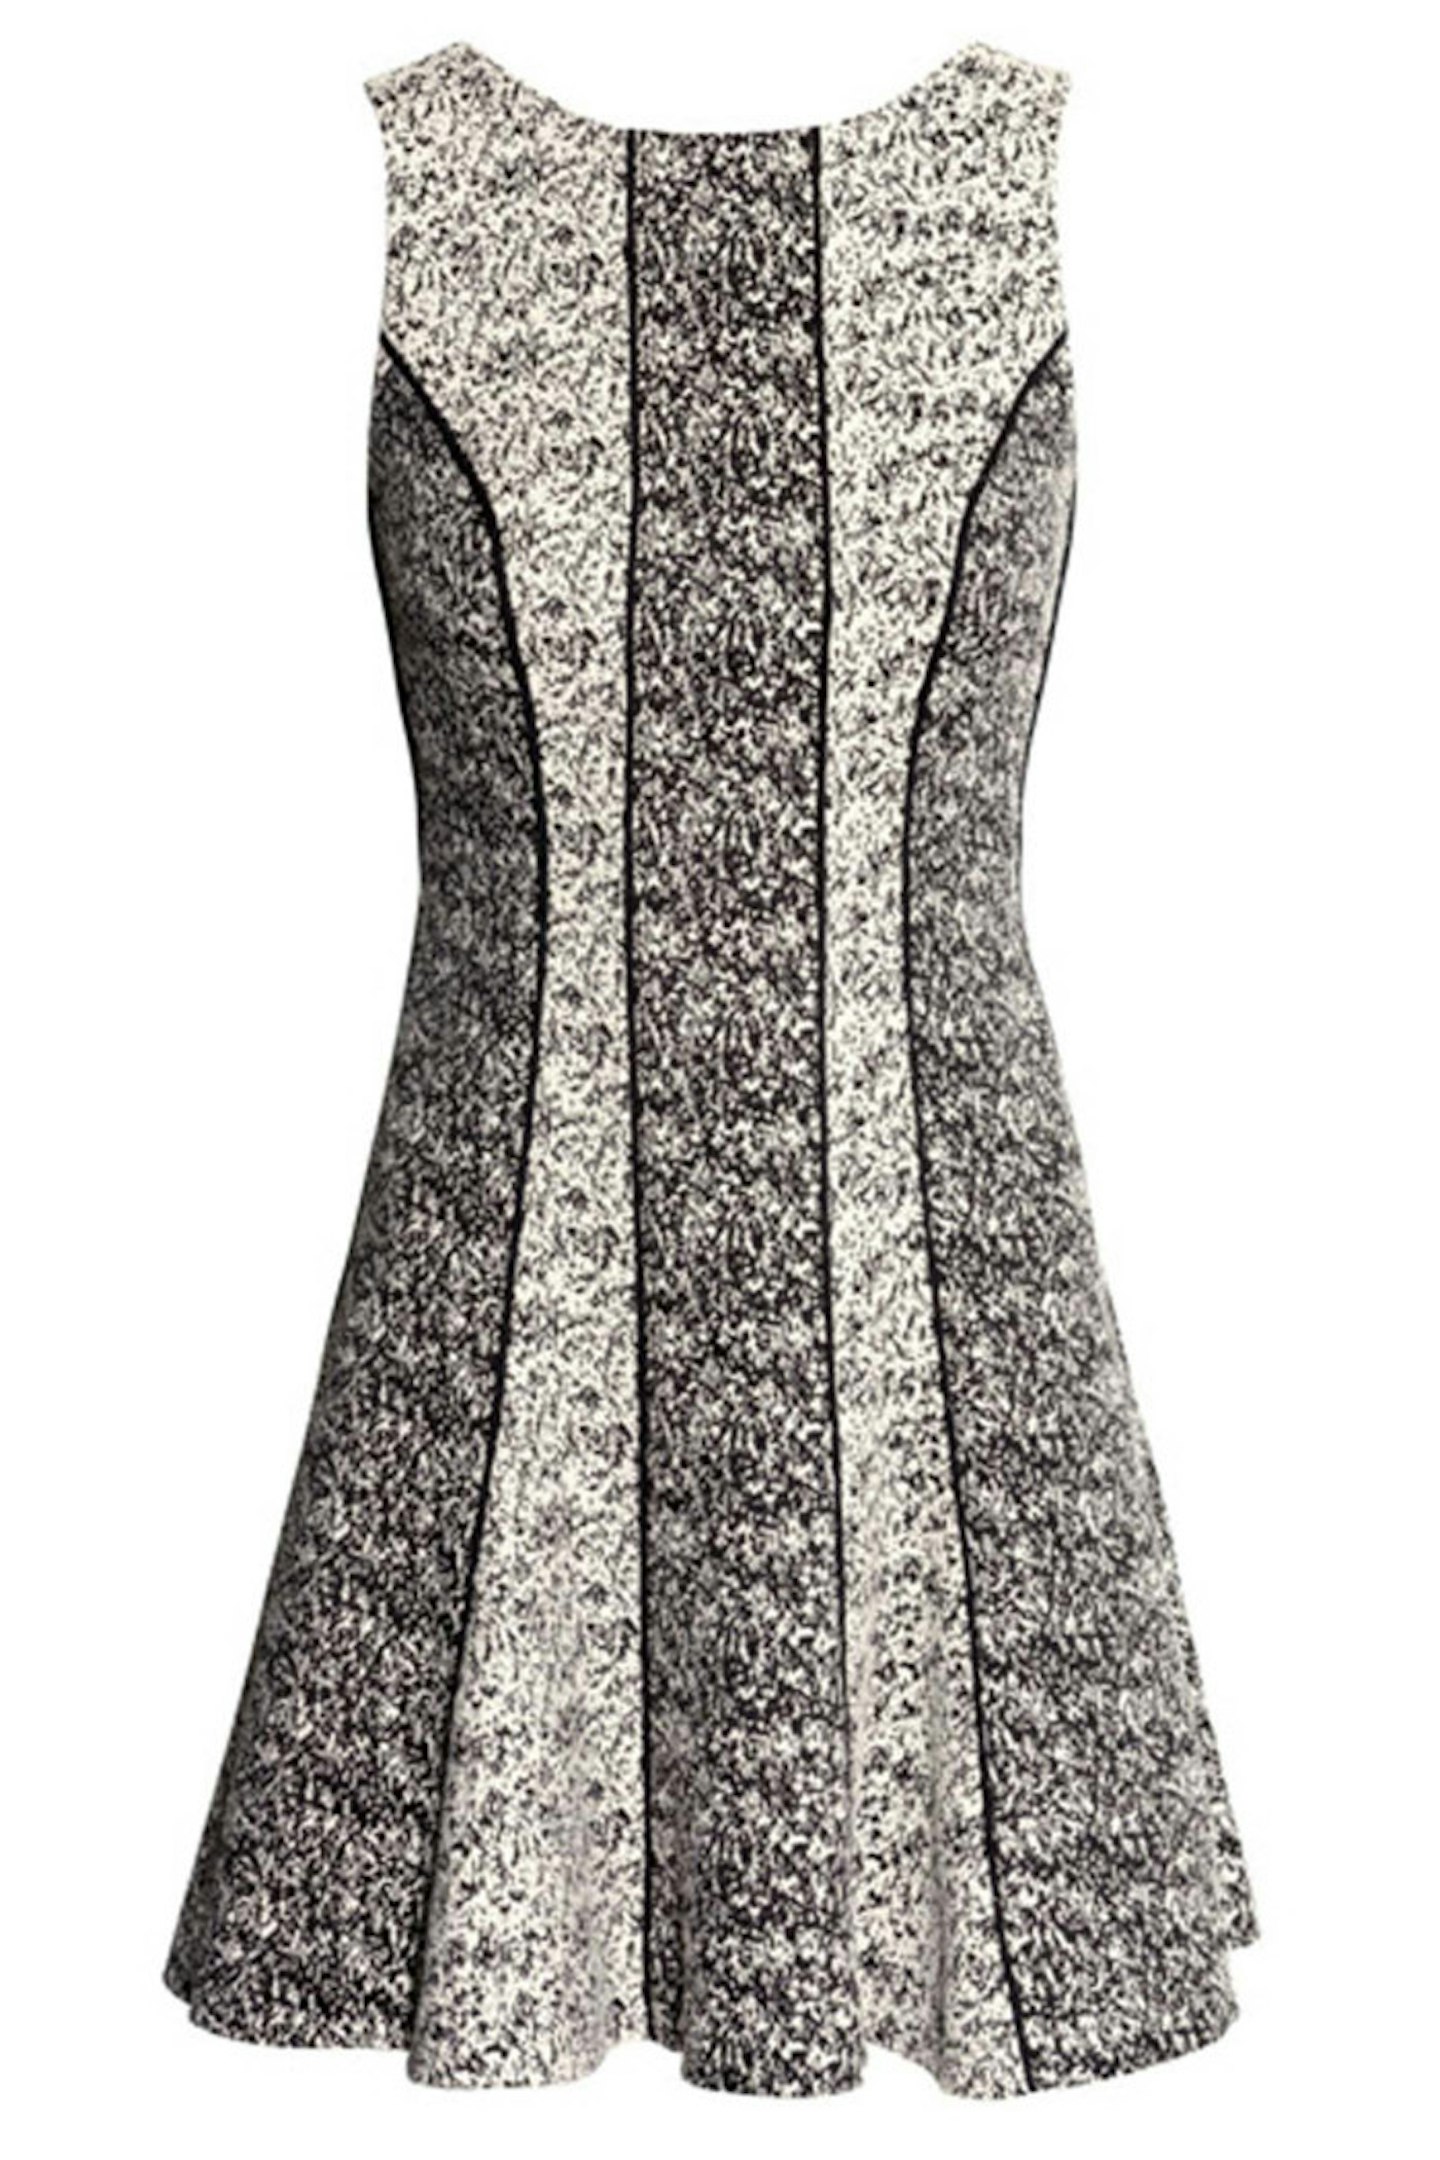 15. Sleeveless Dress, £29.99, H&M